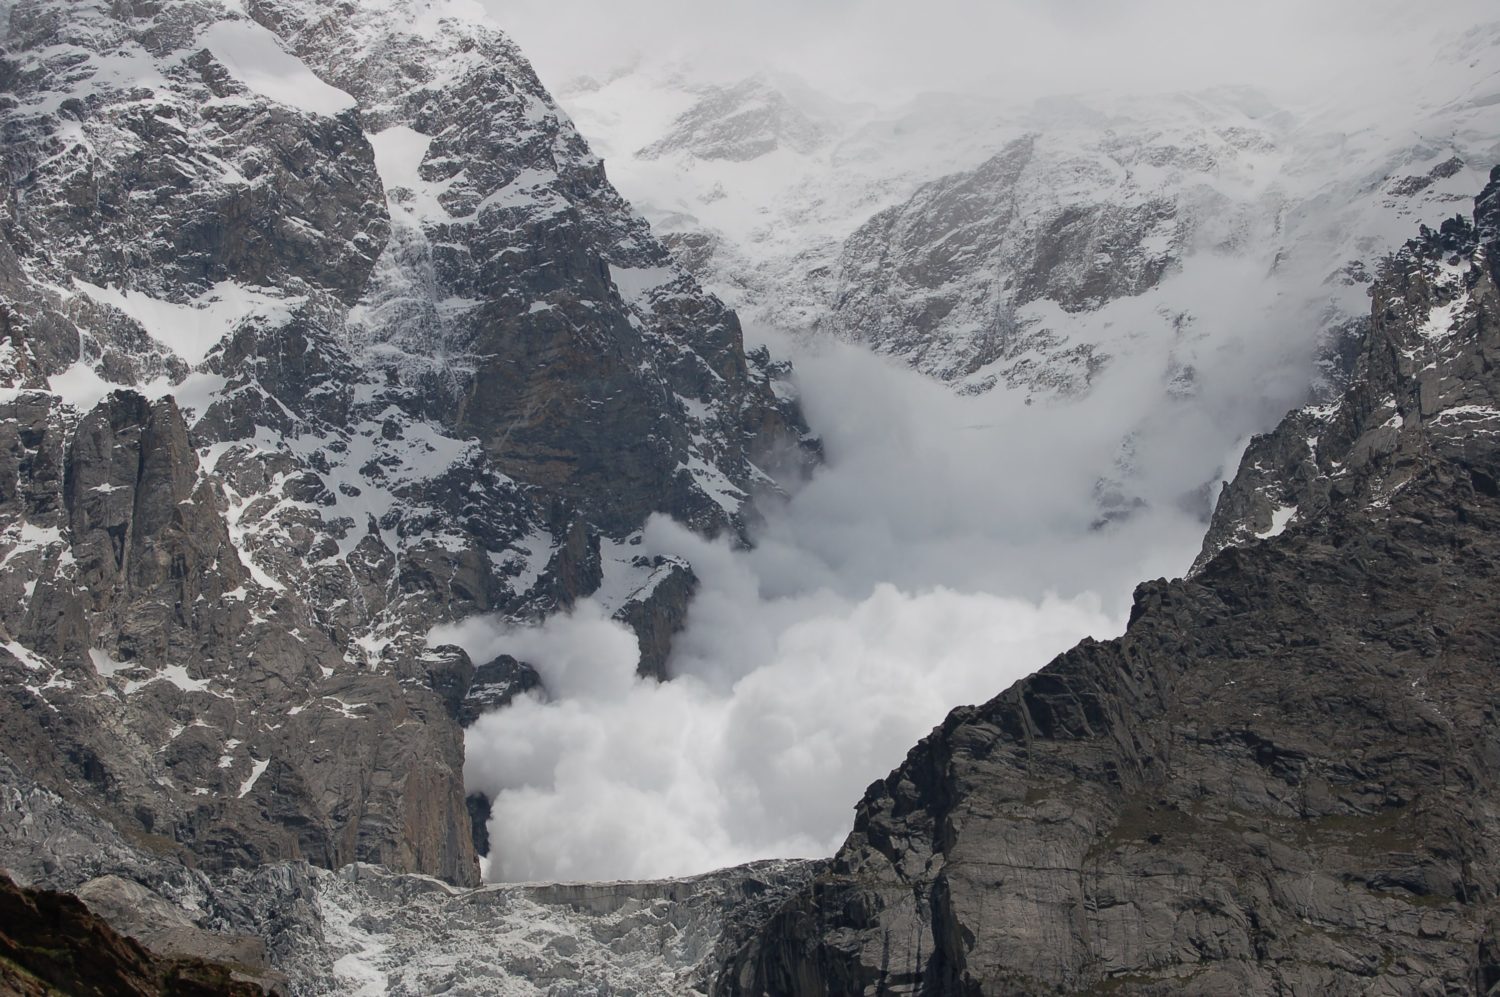 Snow Mountains Fall Slide Slip Huge Avalanche India Pakistan 